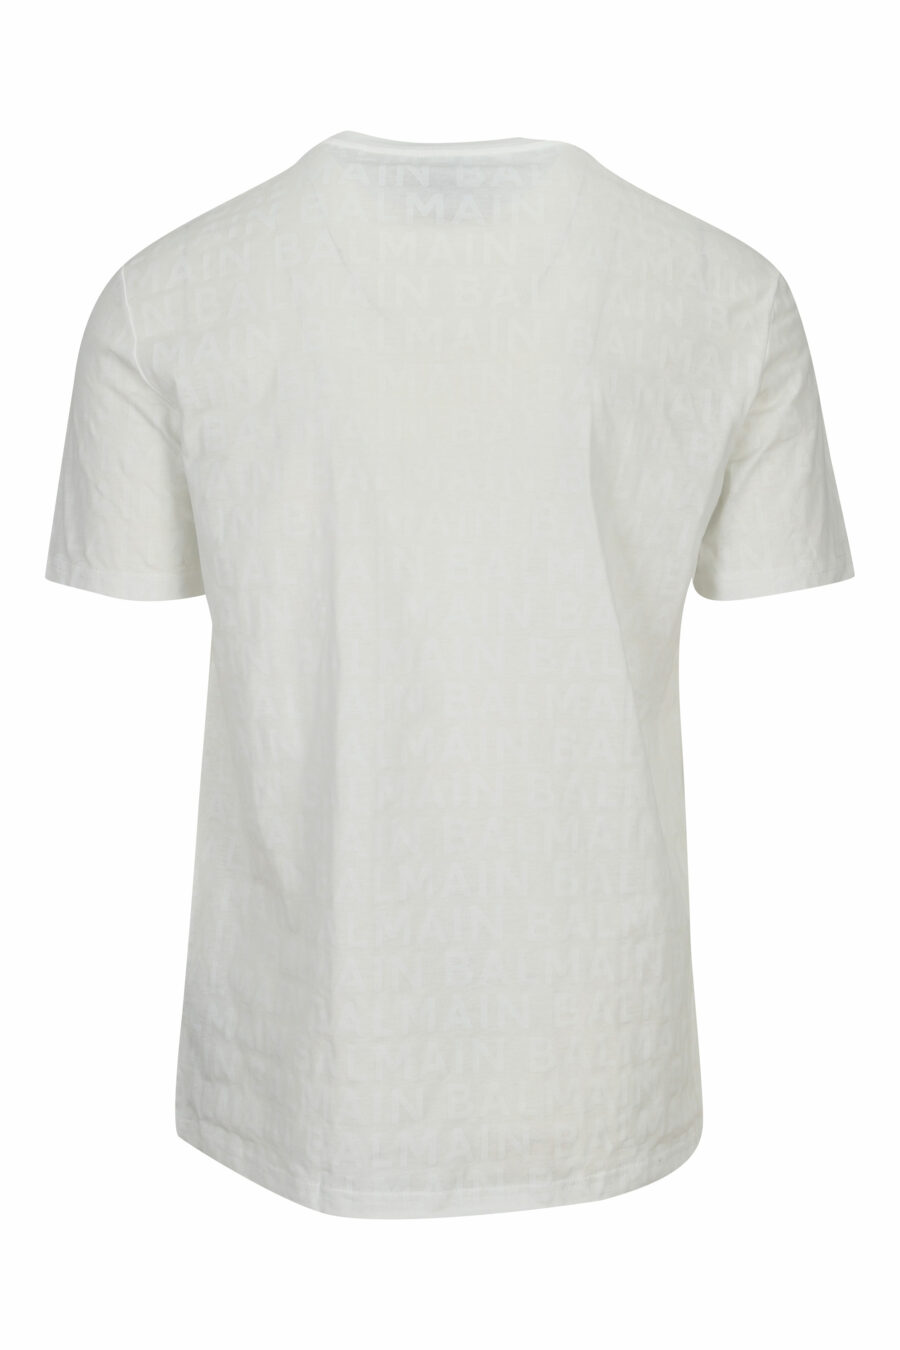 White T-shirt with monochrome monogram - 8032674525390 1